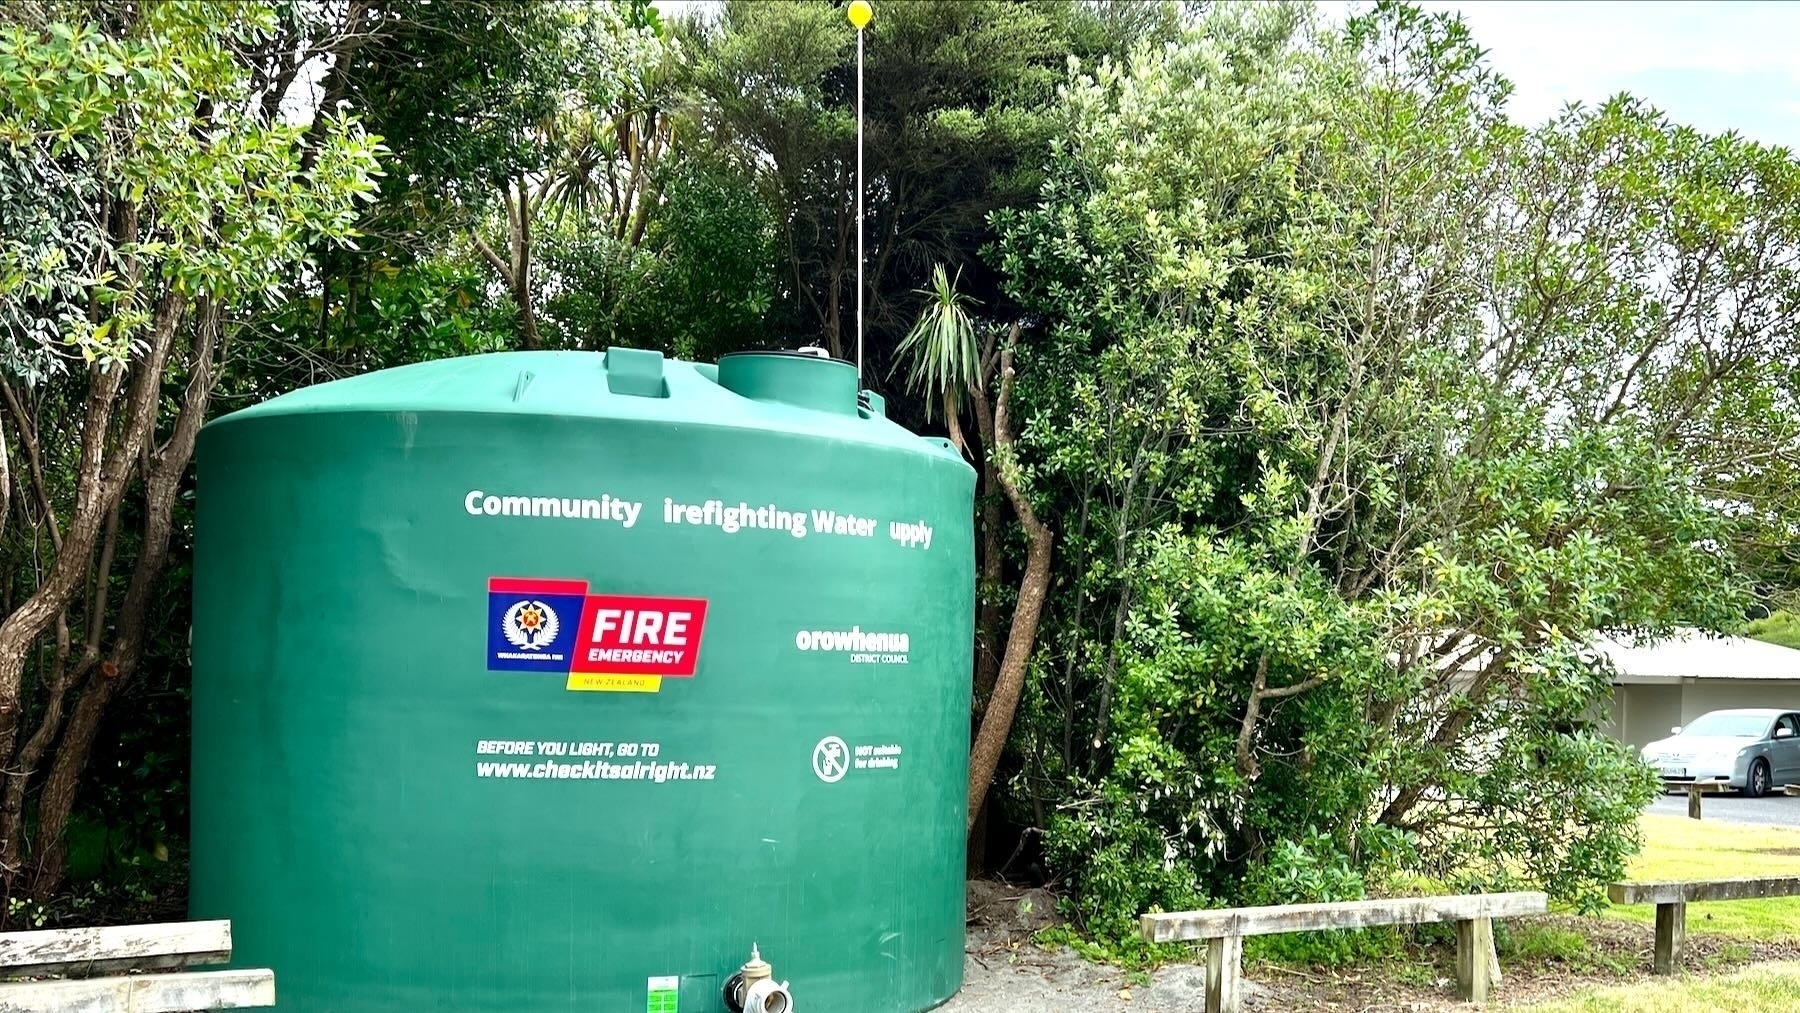 Community firefighting water tank. 